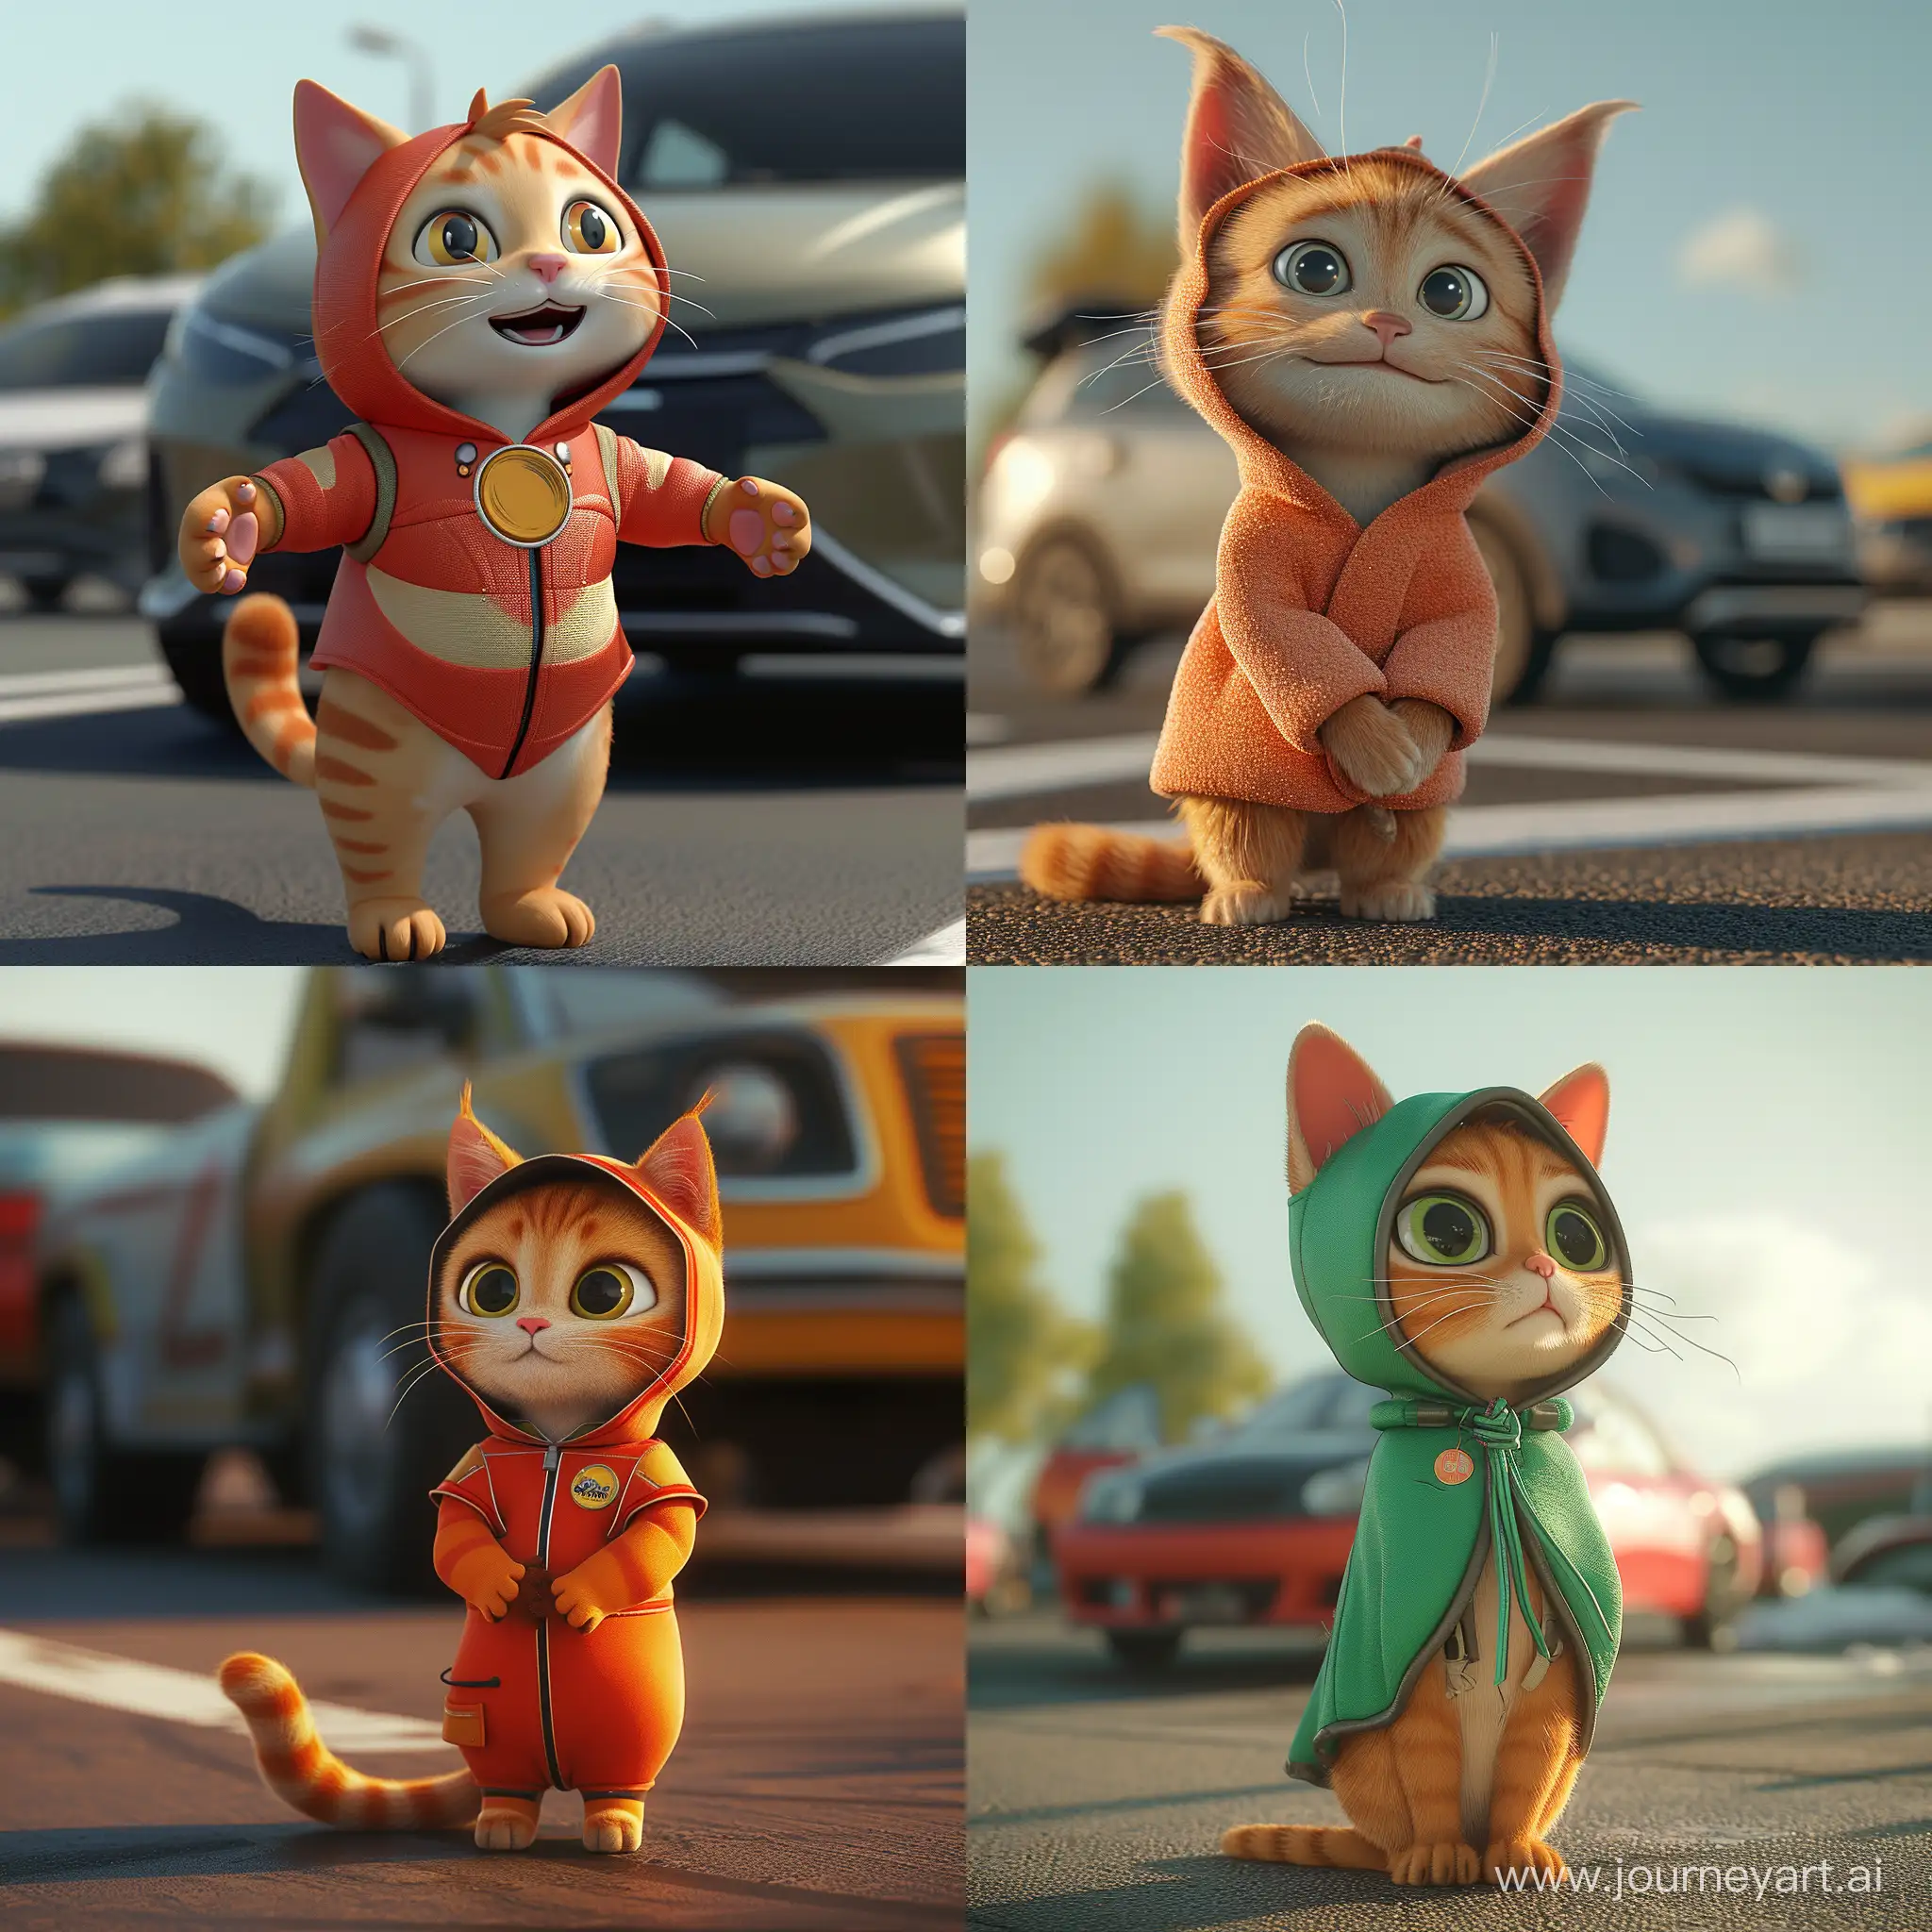 Playful-Cartoon-3D-Cat-Costume-on-Car-Background